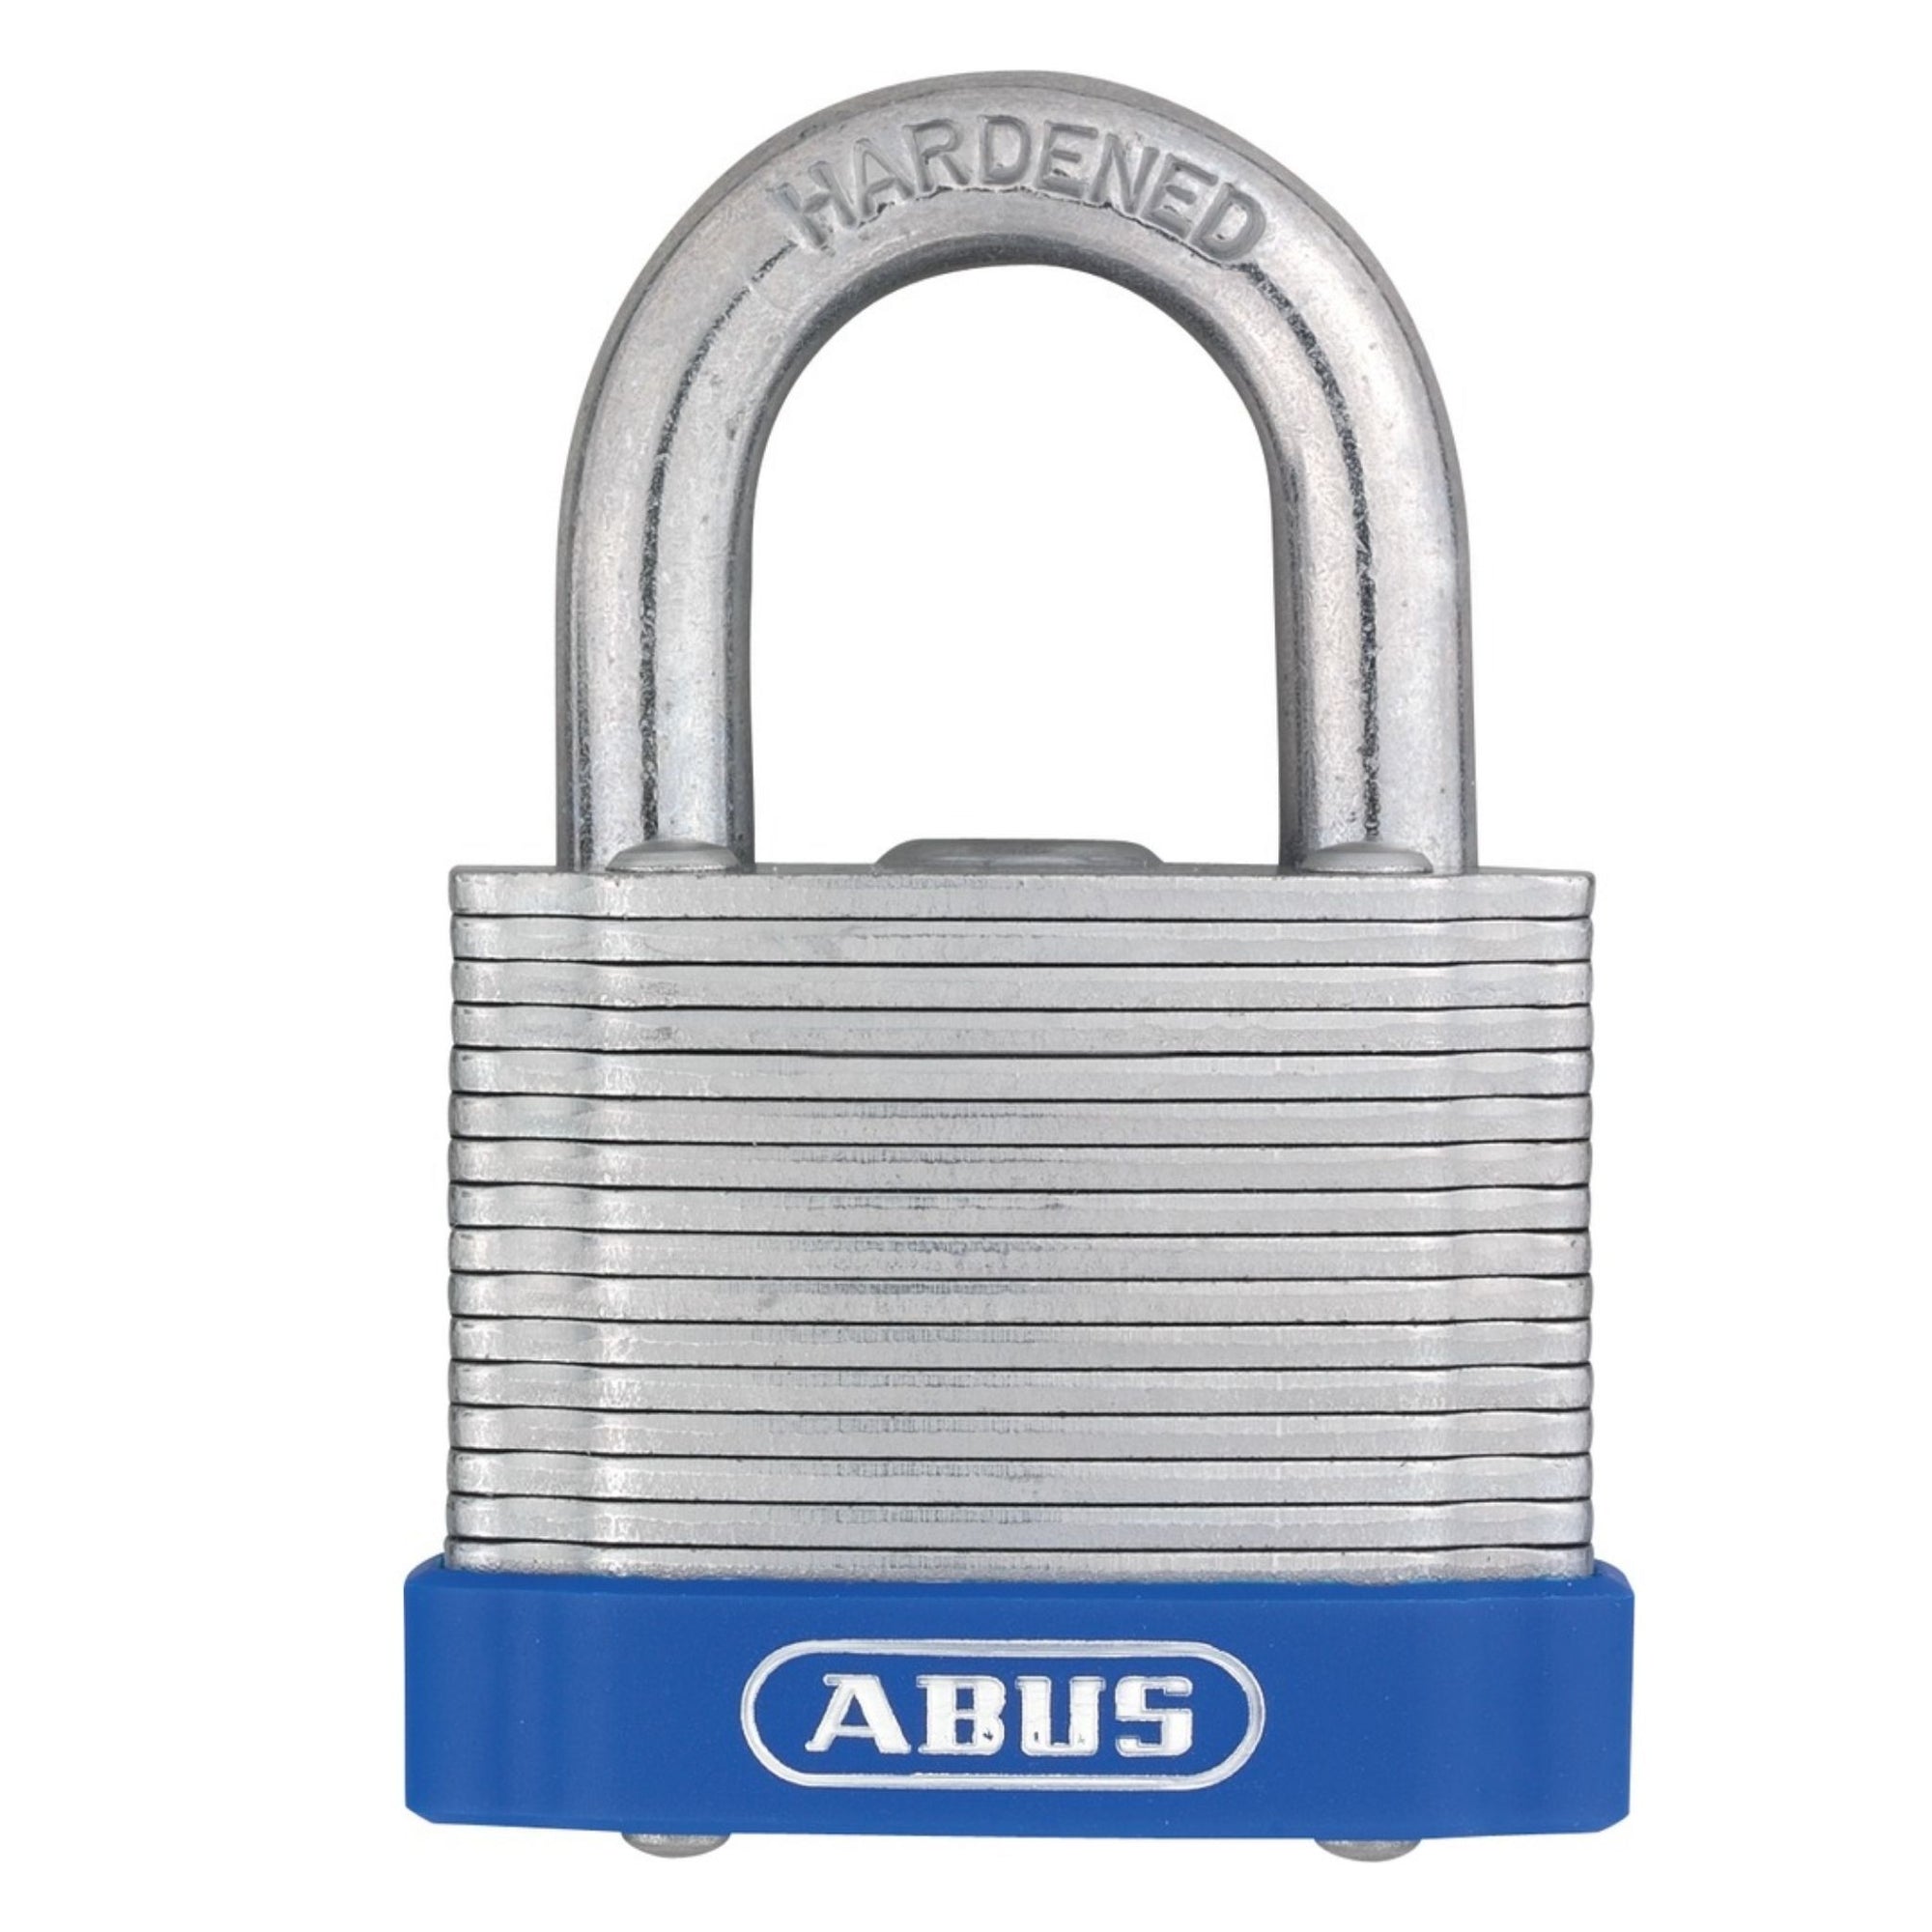 Abus 41/45 Laminated Steel Series Locks with Eterna Coating Keyed Alike (41/45KA), KD or MK Padlocks - The Lock Source